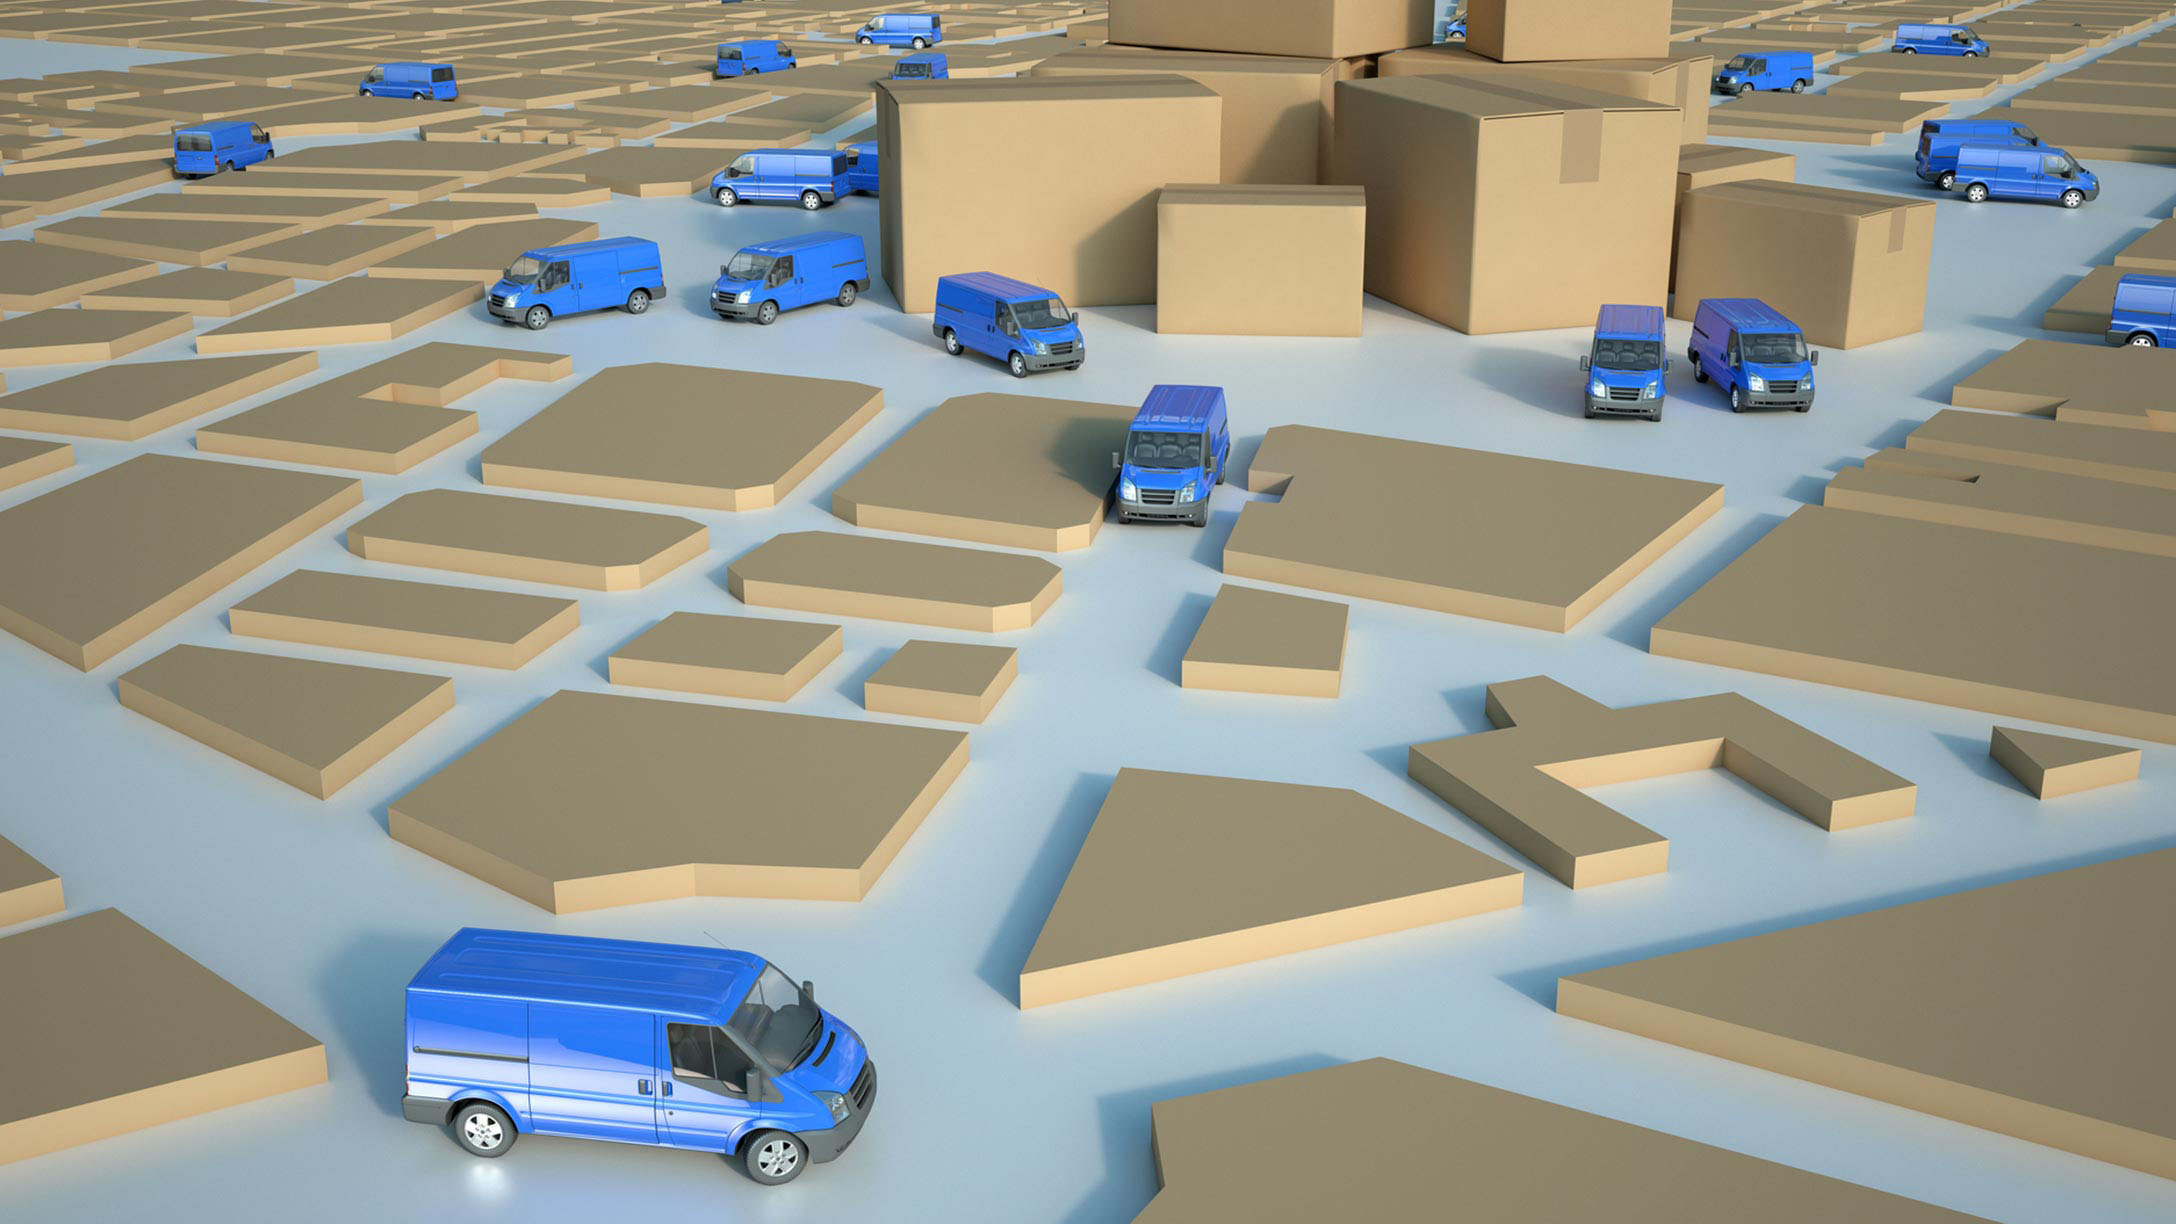 Vans delivering packages on a grid of streets